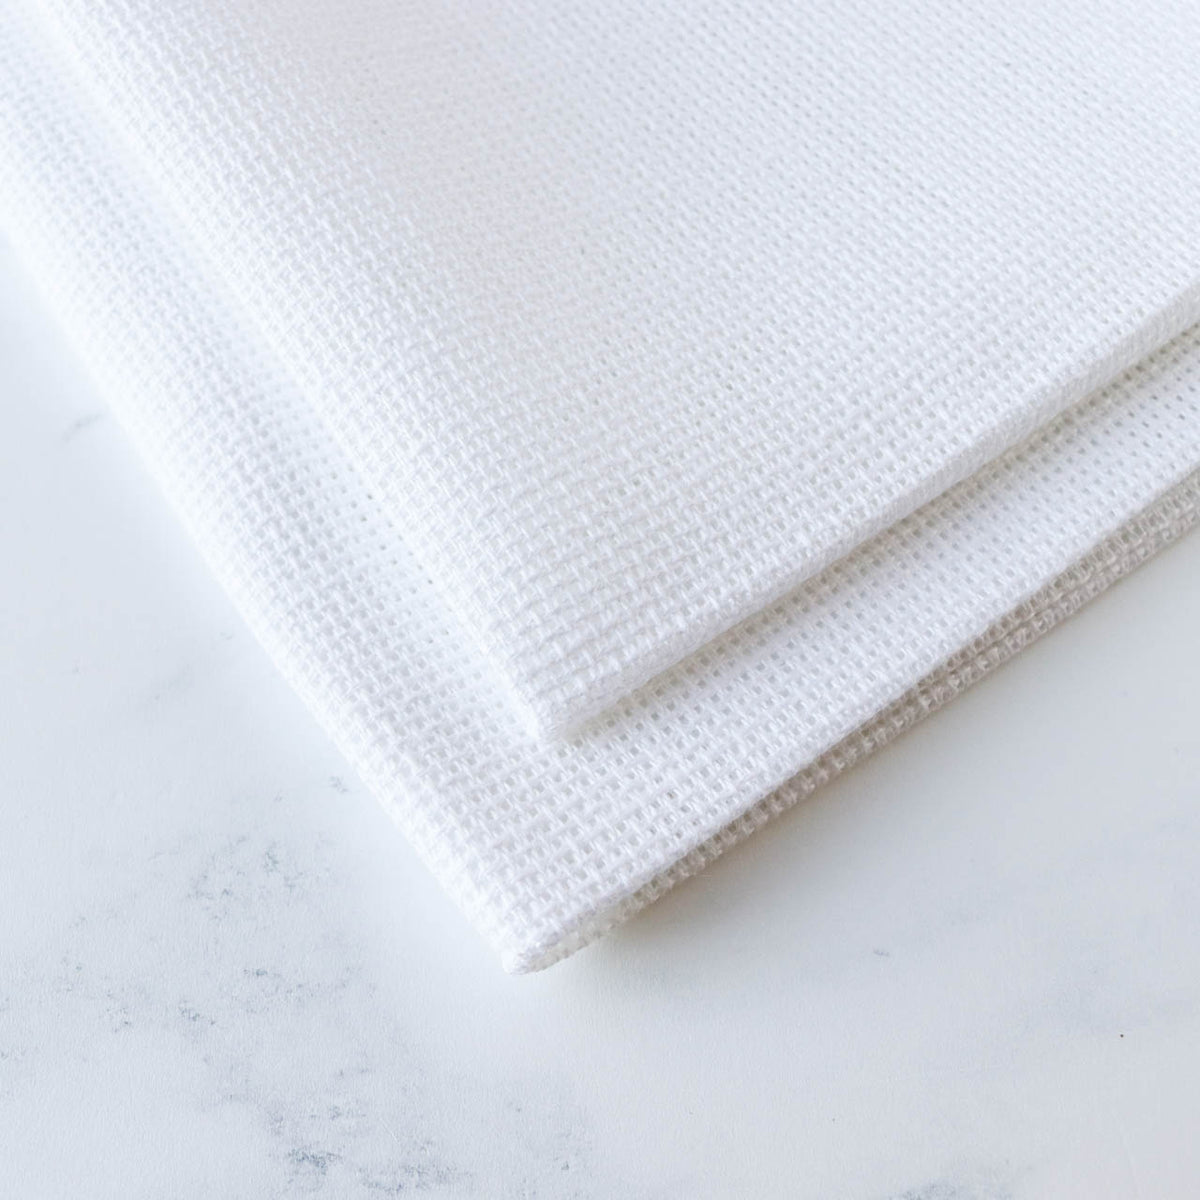 10-count Tula Cross Stitch Fabric - White